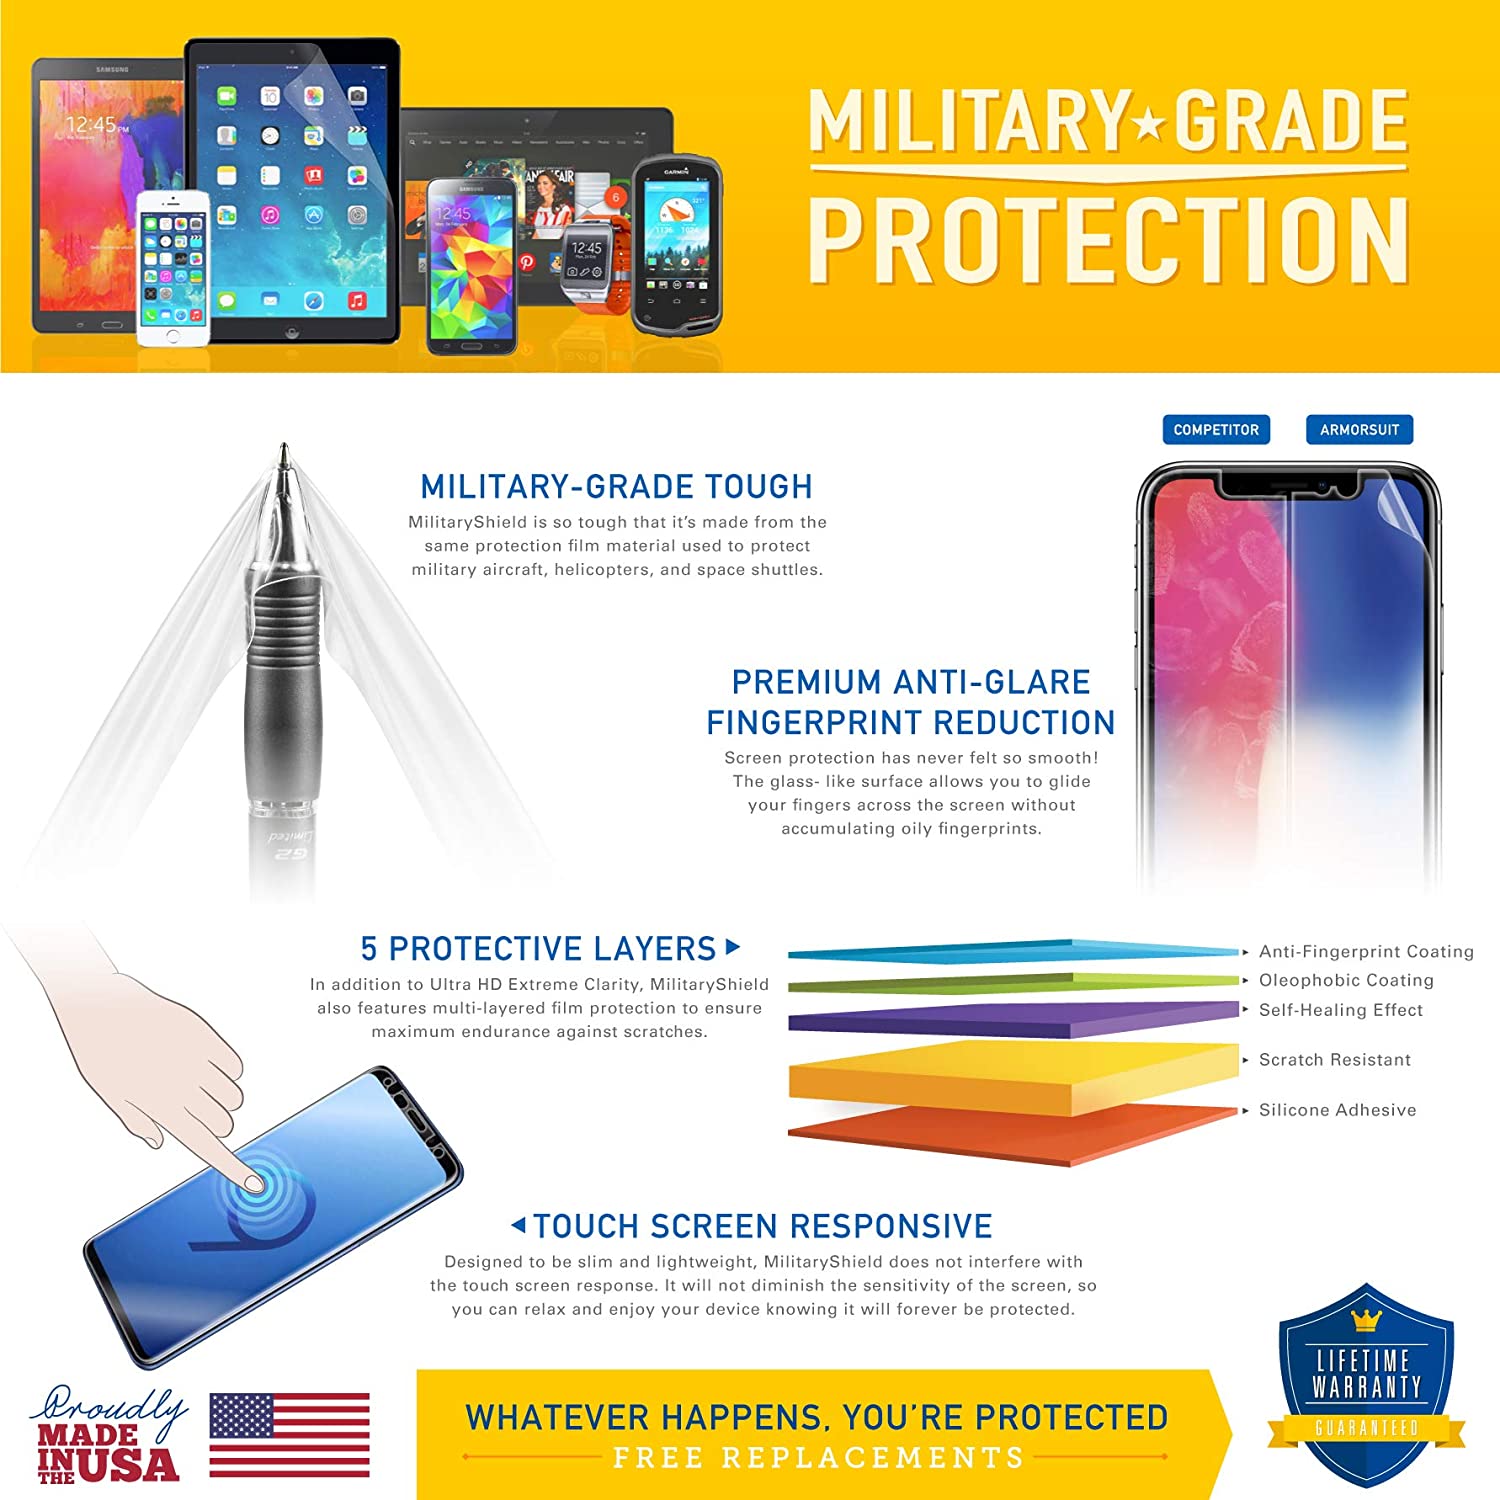 Motorola Triumph Screen Protector + Black Carbon Fiber Skin Protector